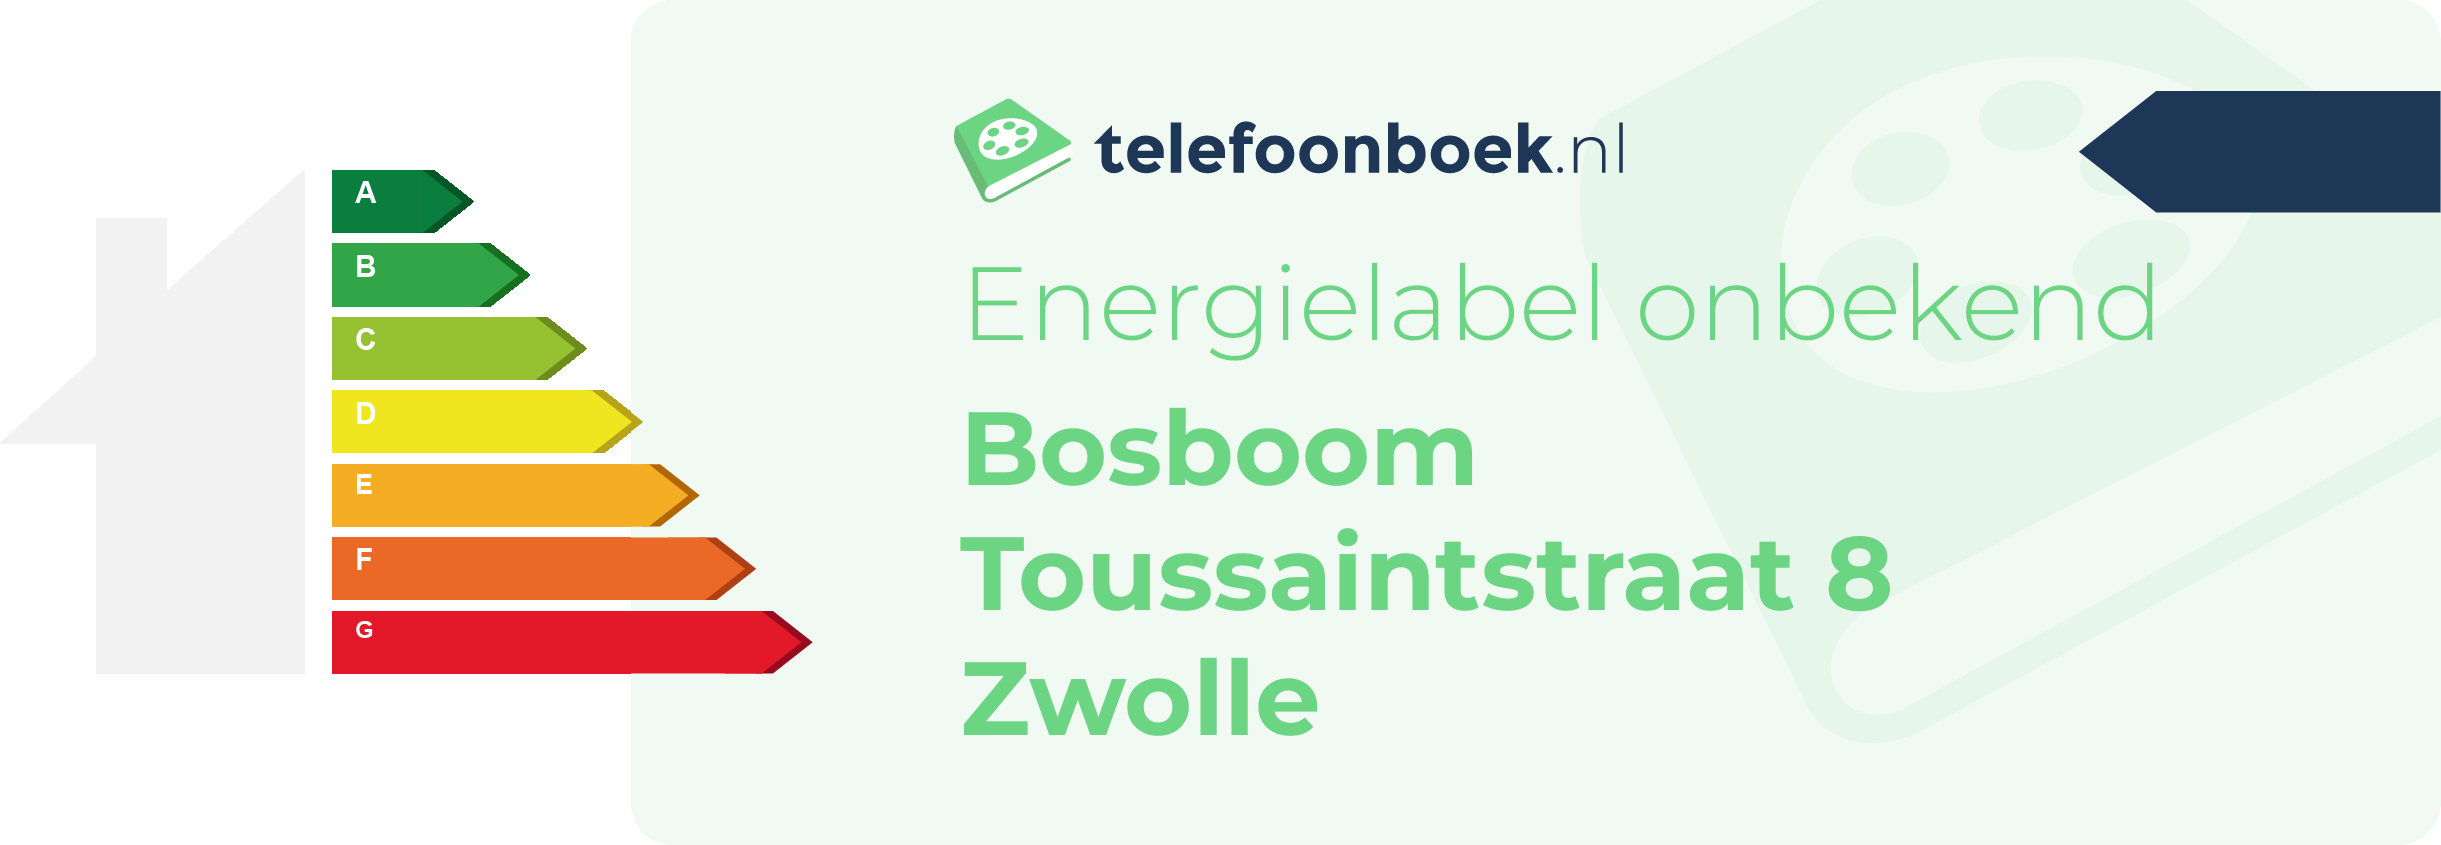 Energielabel Bosboom Toussaintstraat 8 Zwolle